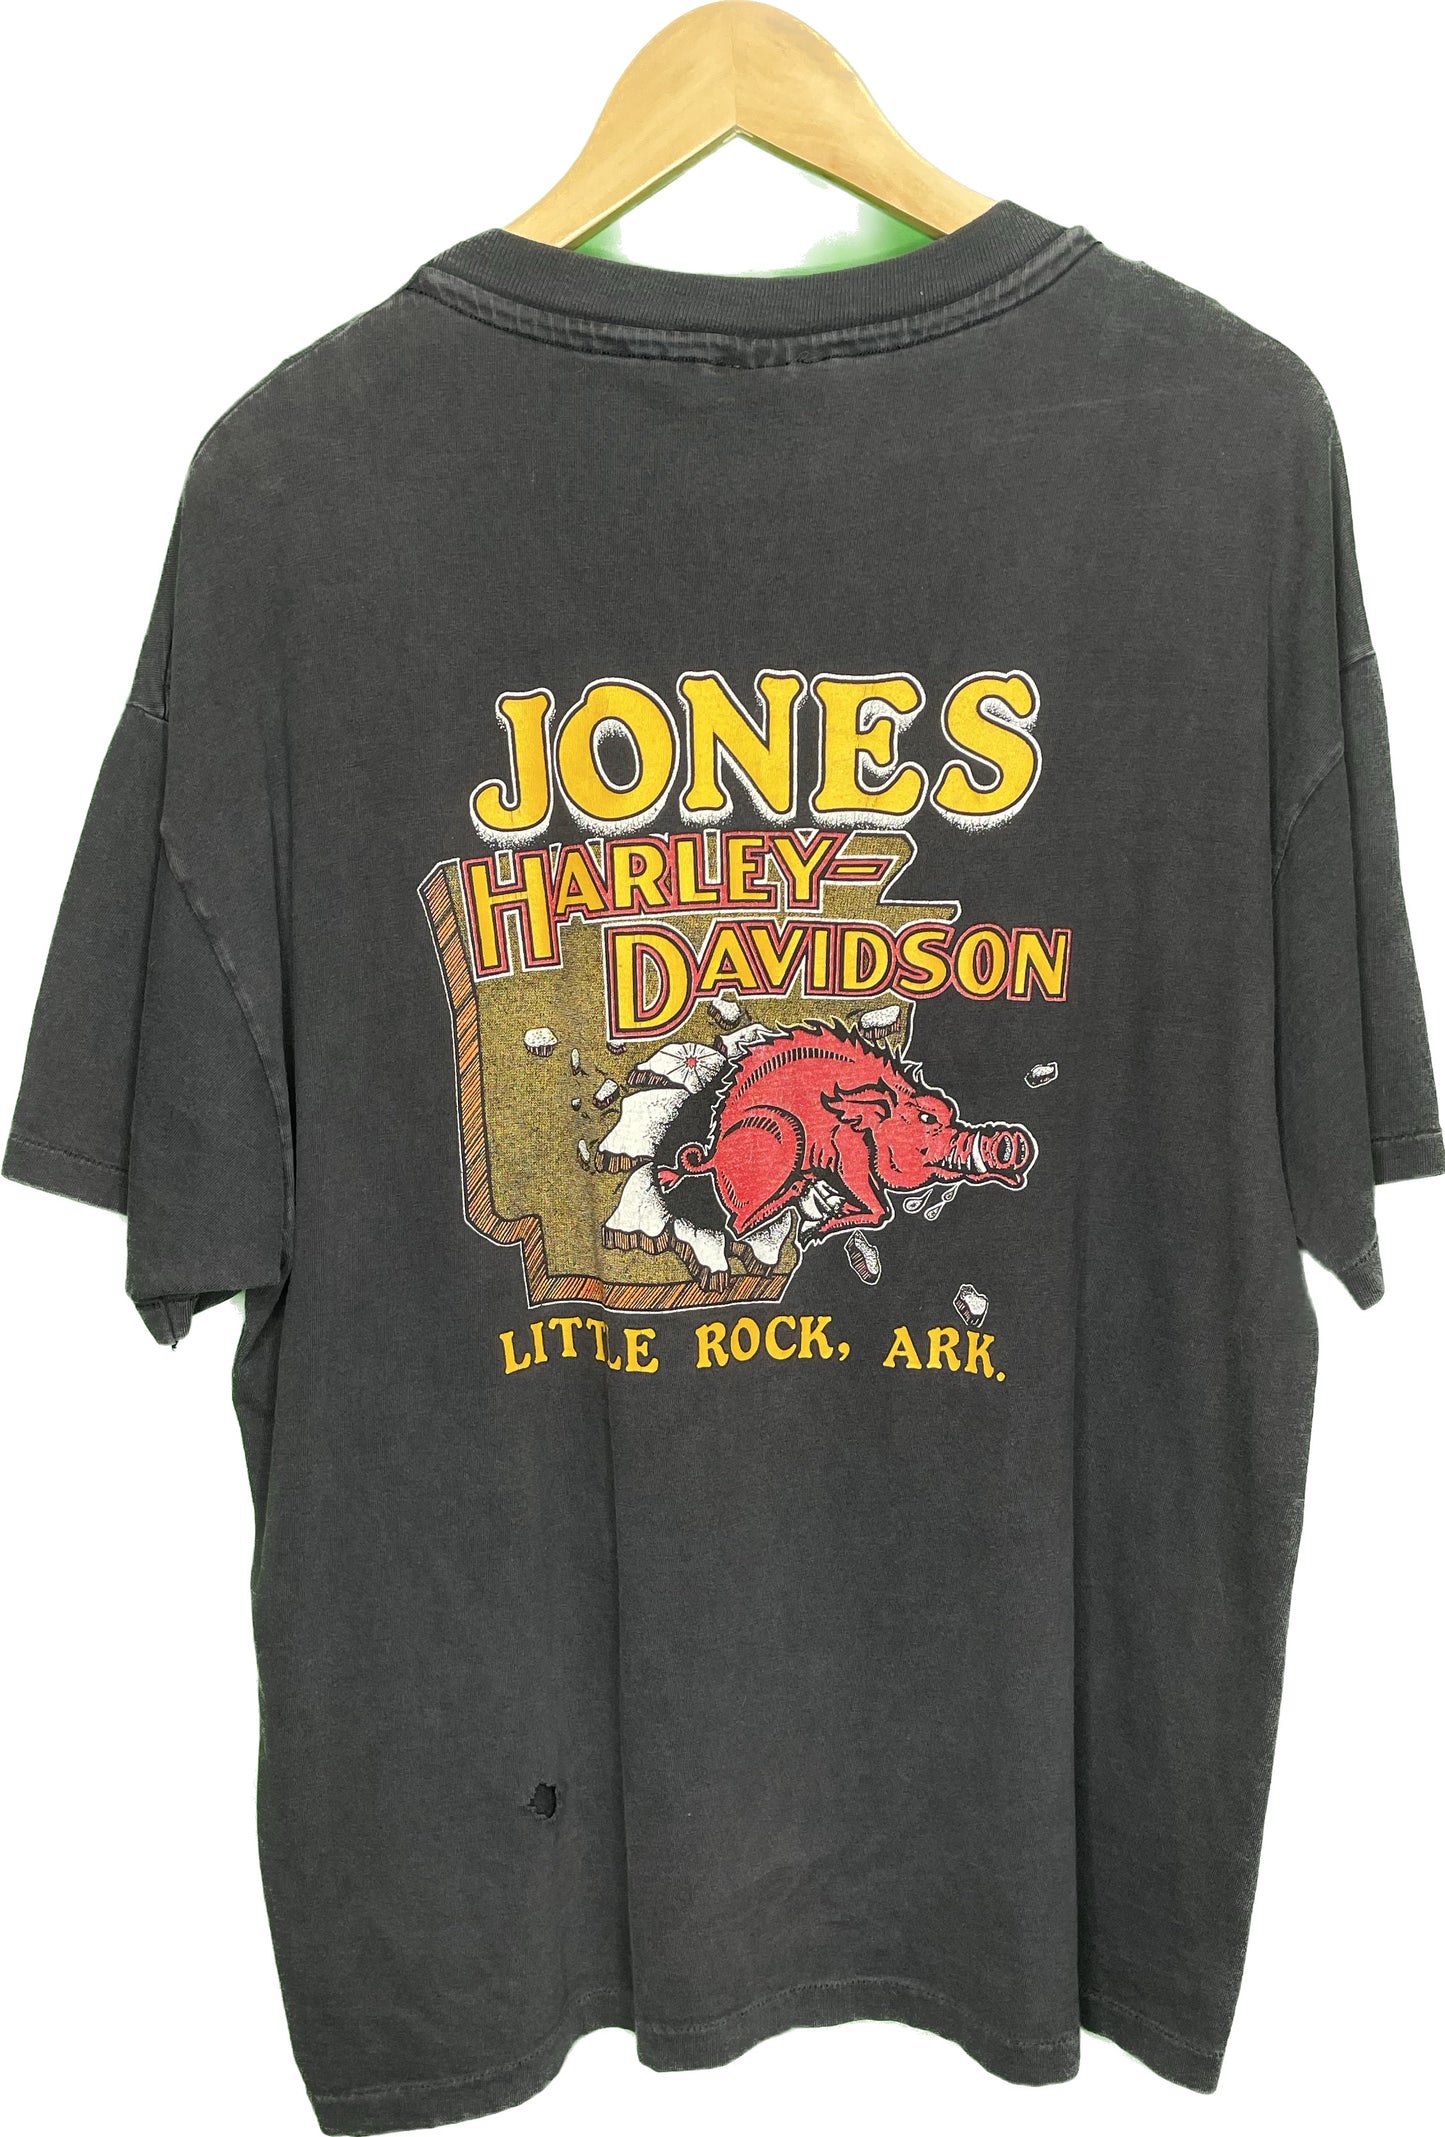 Vintage XL 90s Harley Davidson Jones Little Rock Ark T-Shirt